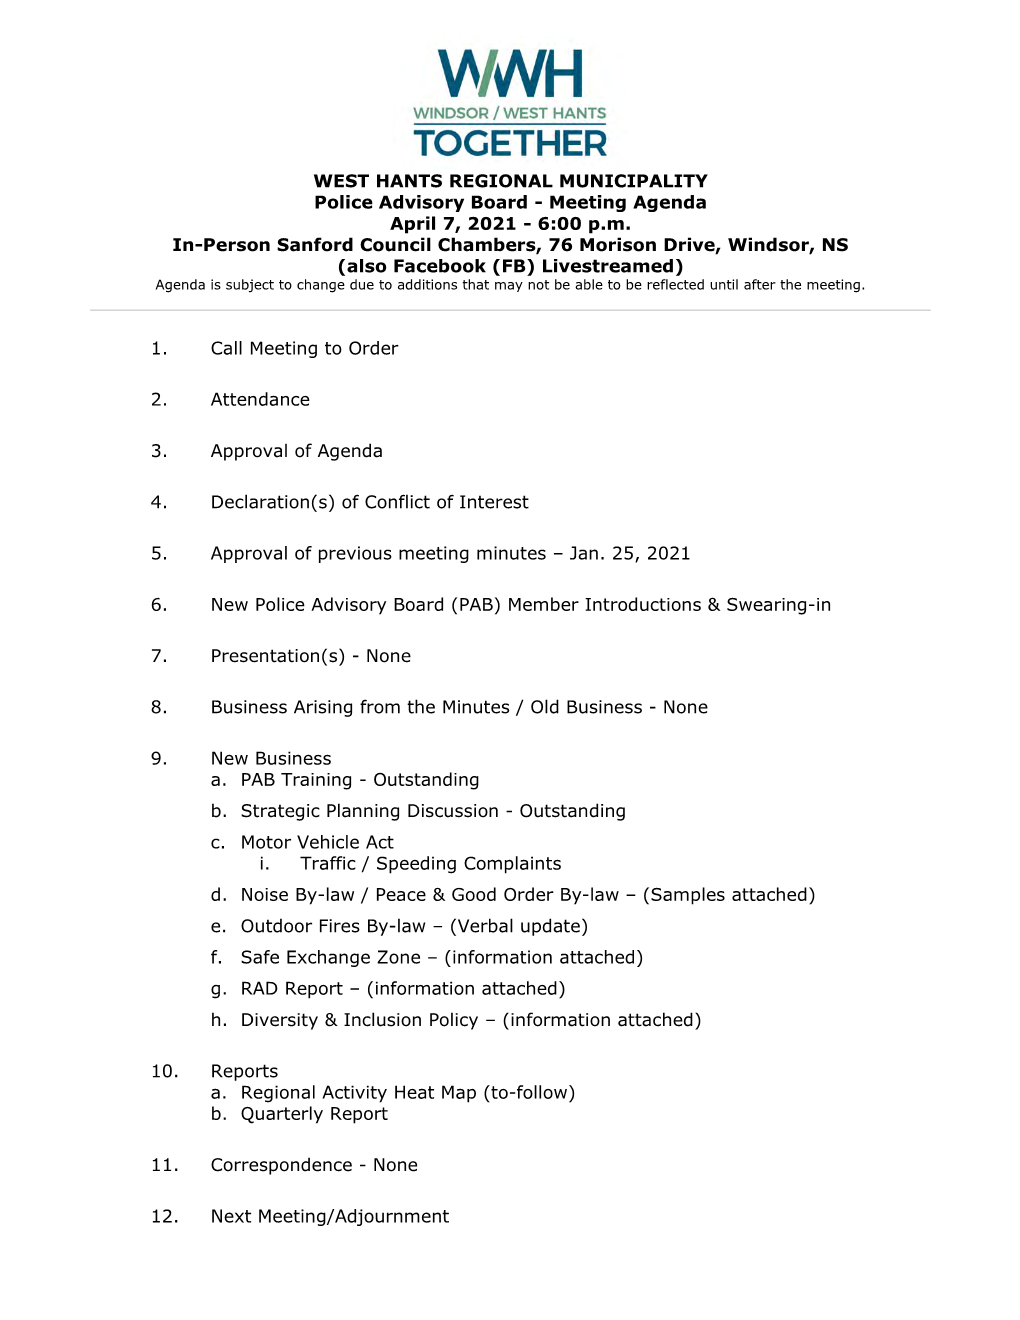 WEST HANTS REGIONAL MUNICIPALITY Police Advisory Board - Meeting Agenda April 7, 2021 - 6:00 P.M